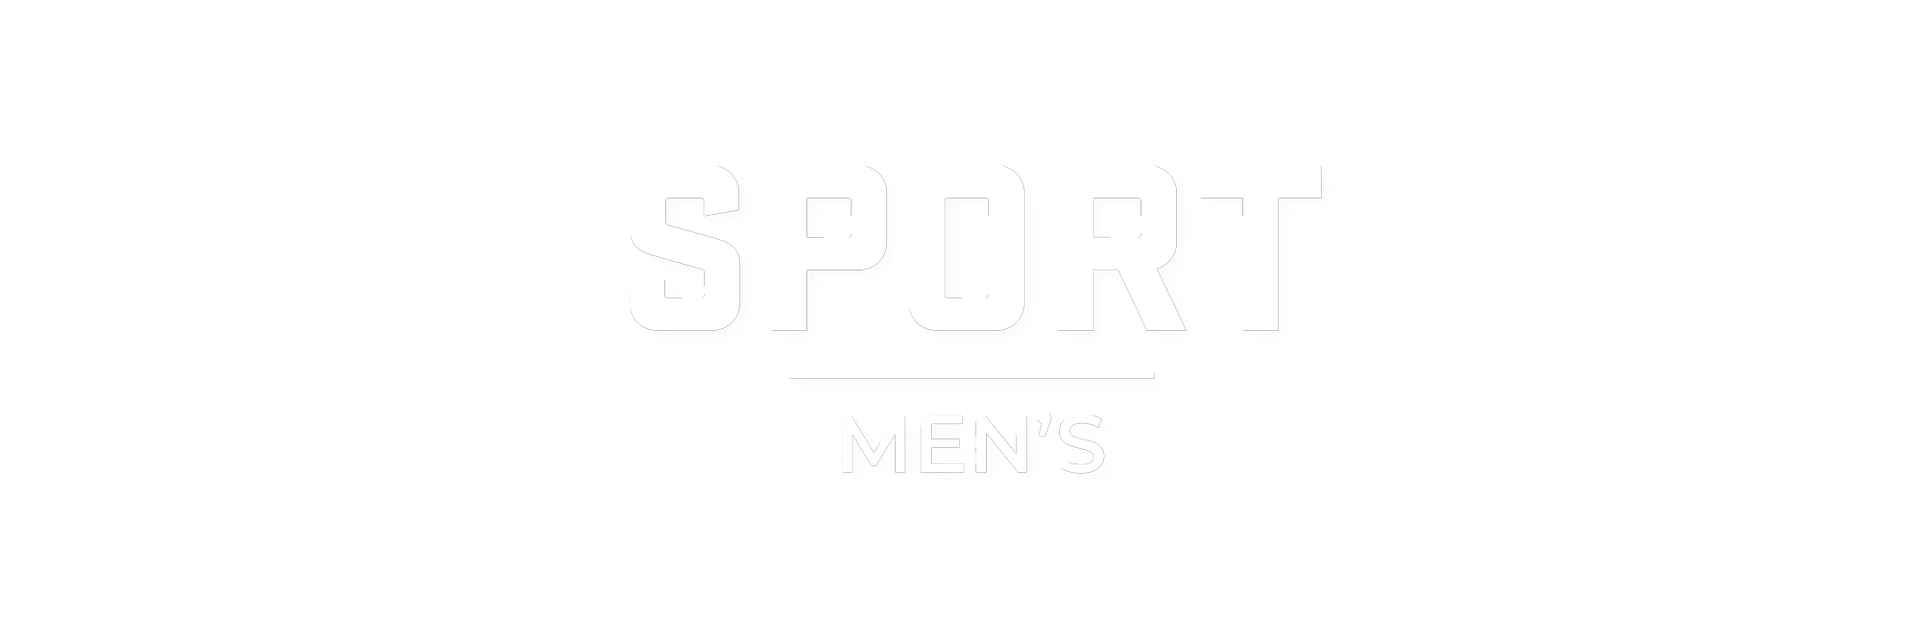 Men's Sport  Header Image Text Overlay